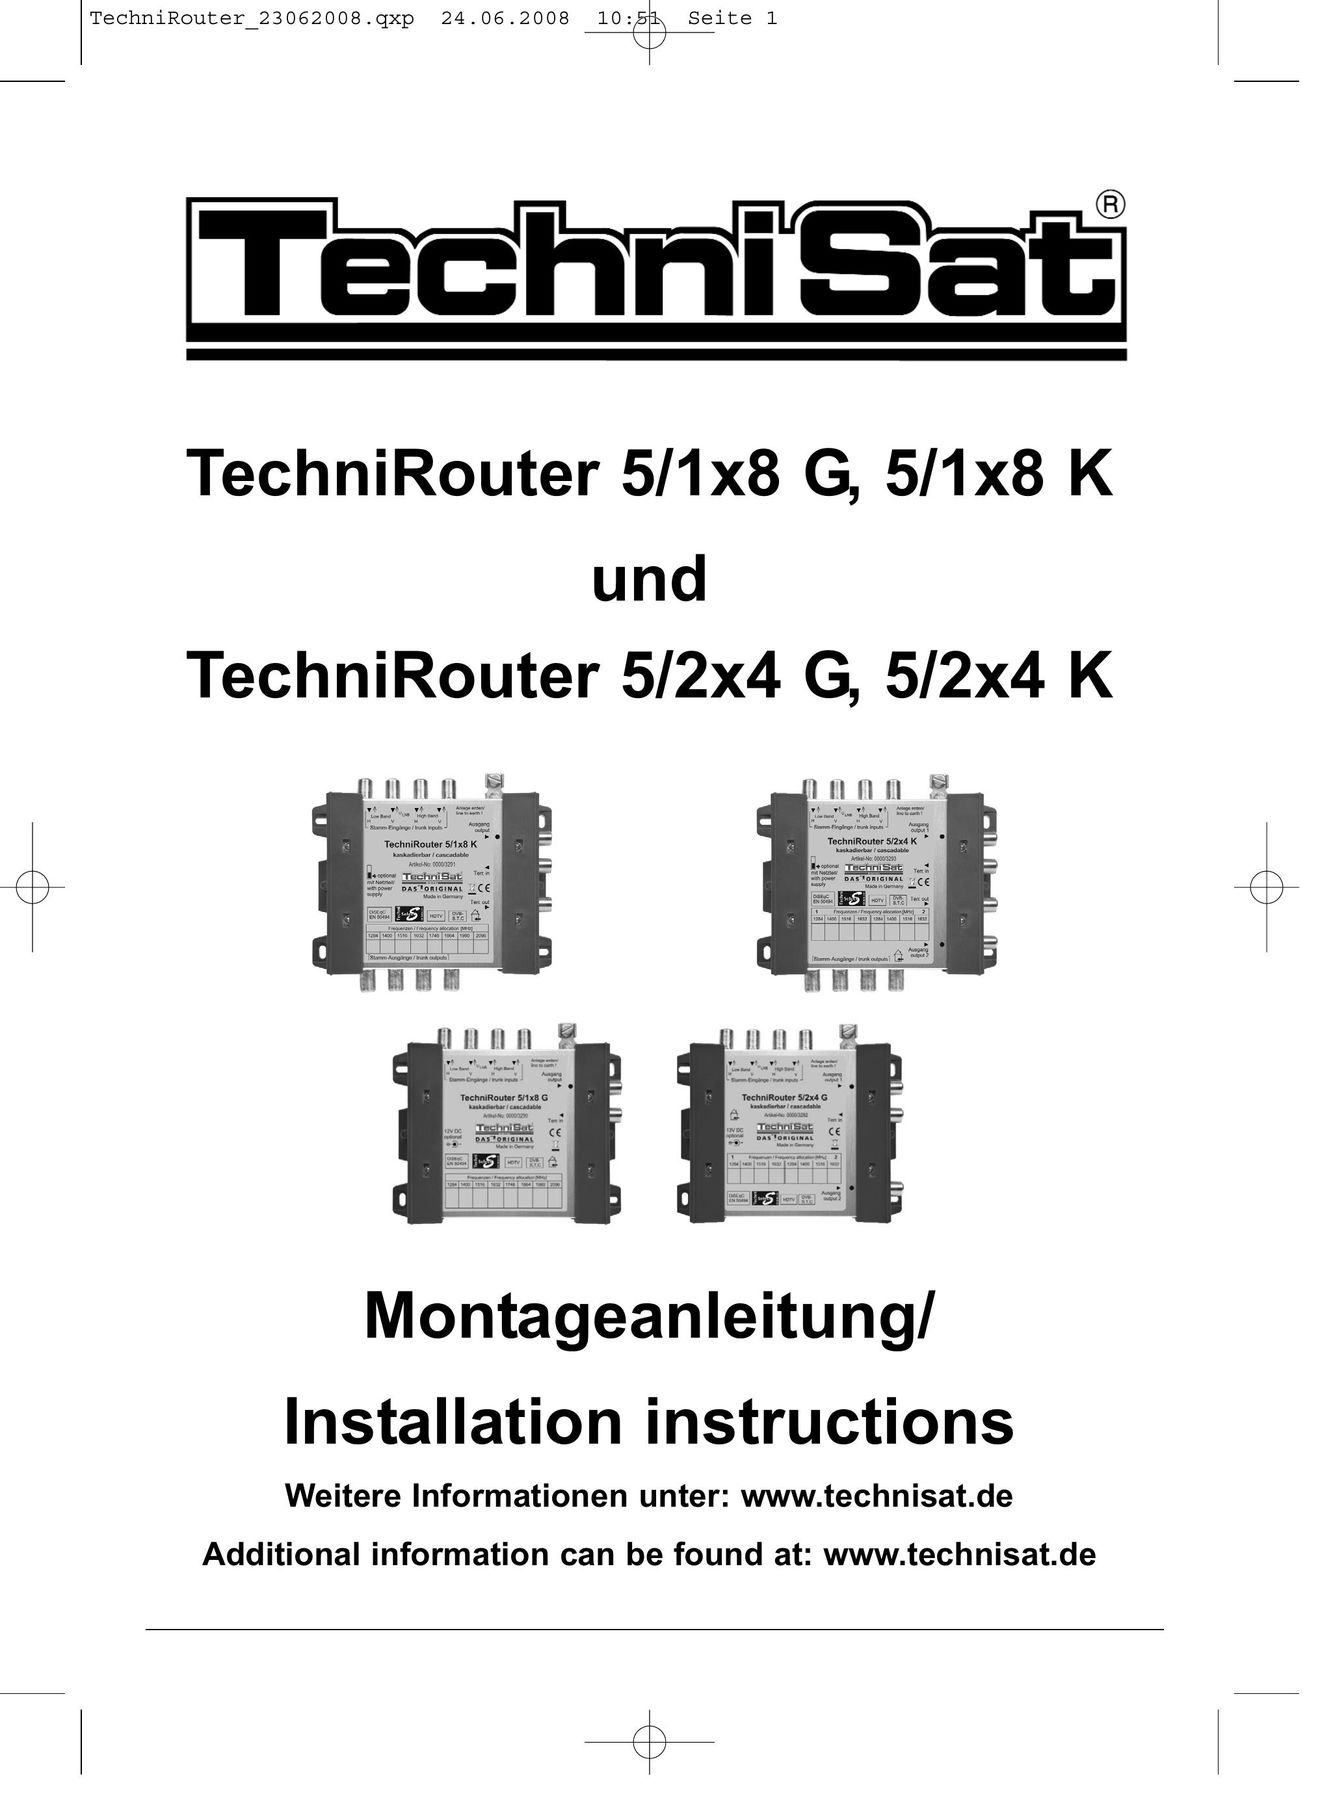 TechniSat 5/1x8 G Network Router User Manual